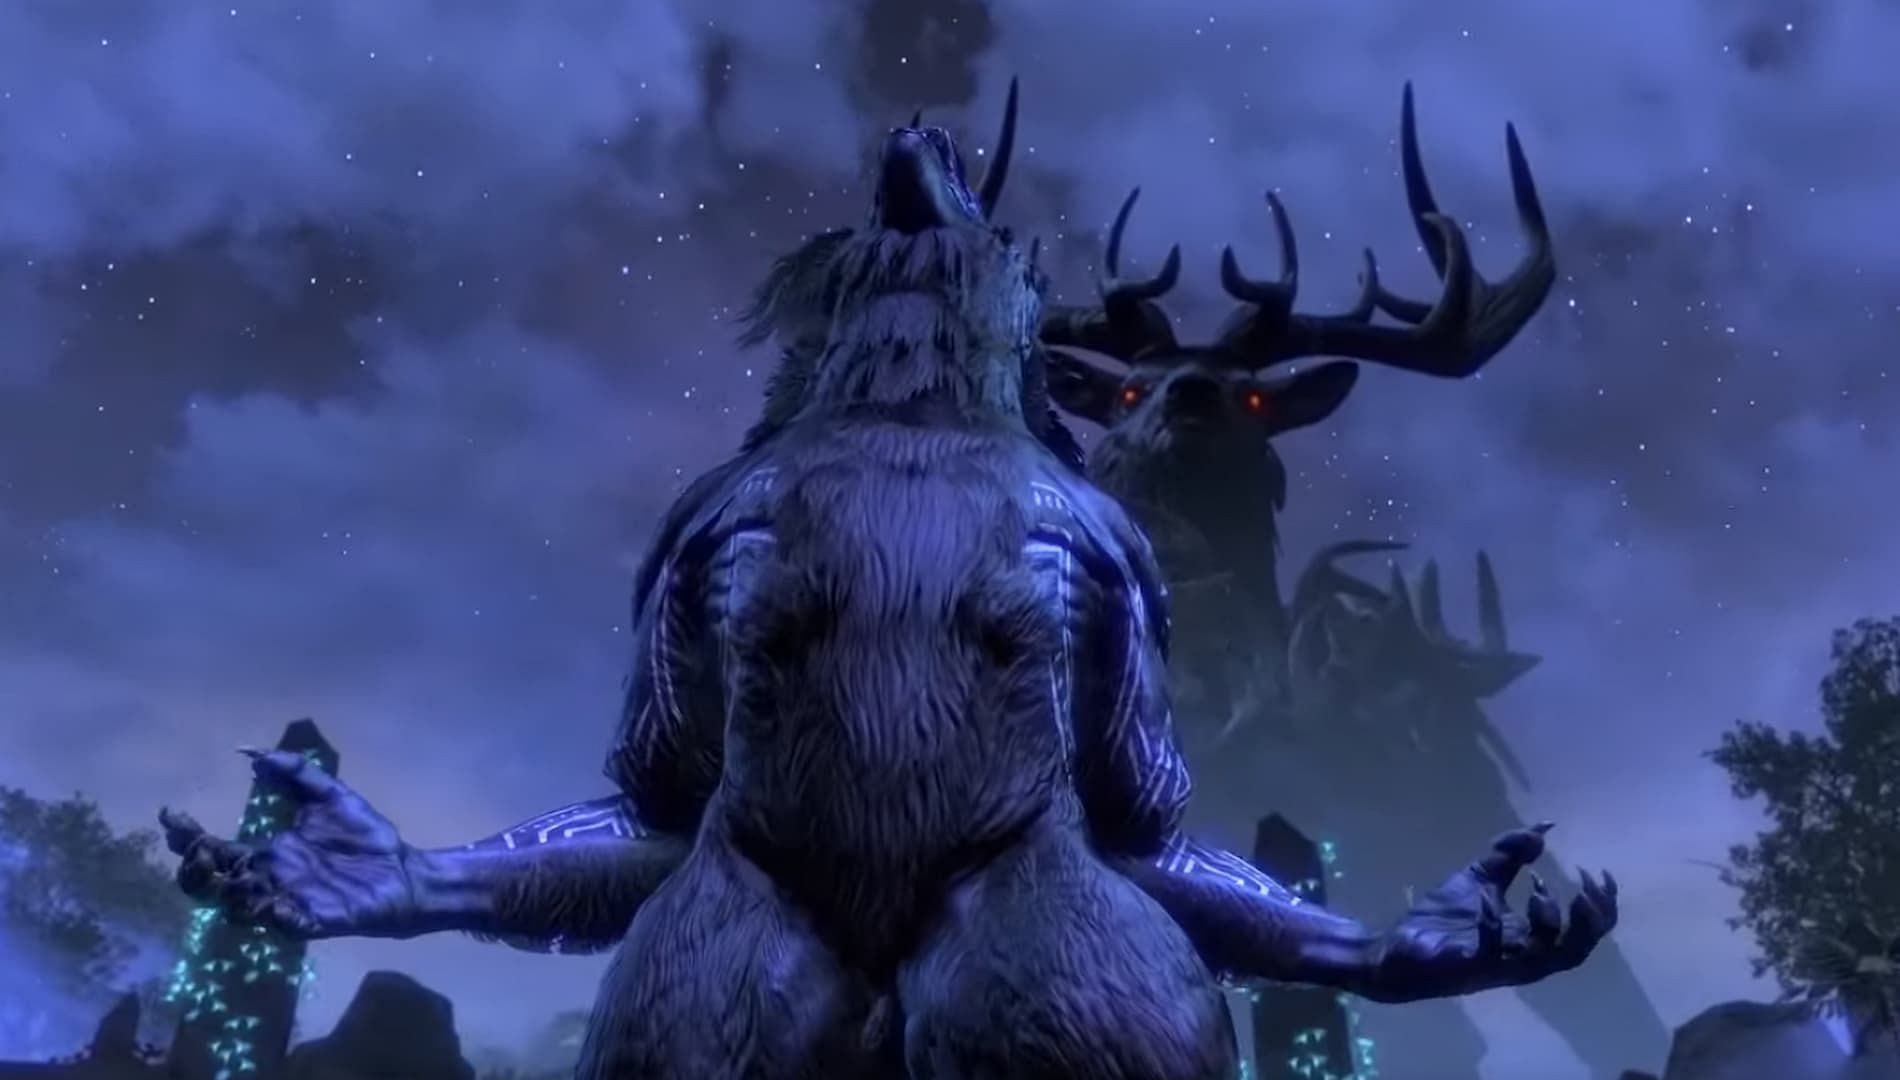 The Warden can transform into a Werewolf in The Elder Scrolls Online (Image via ZeniMax Online Studios)